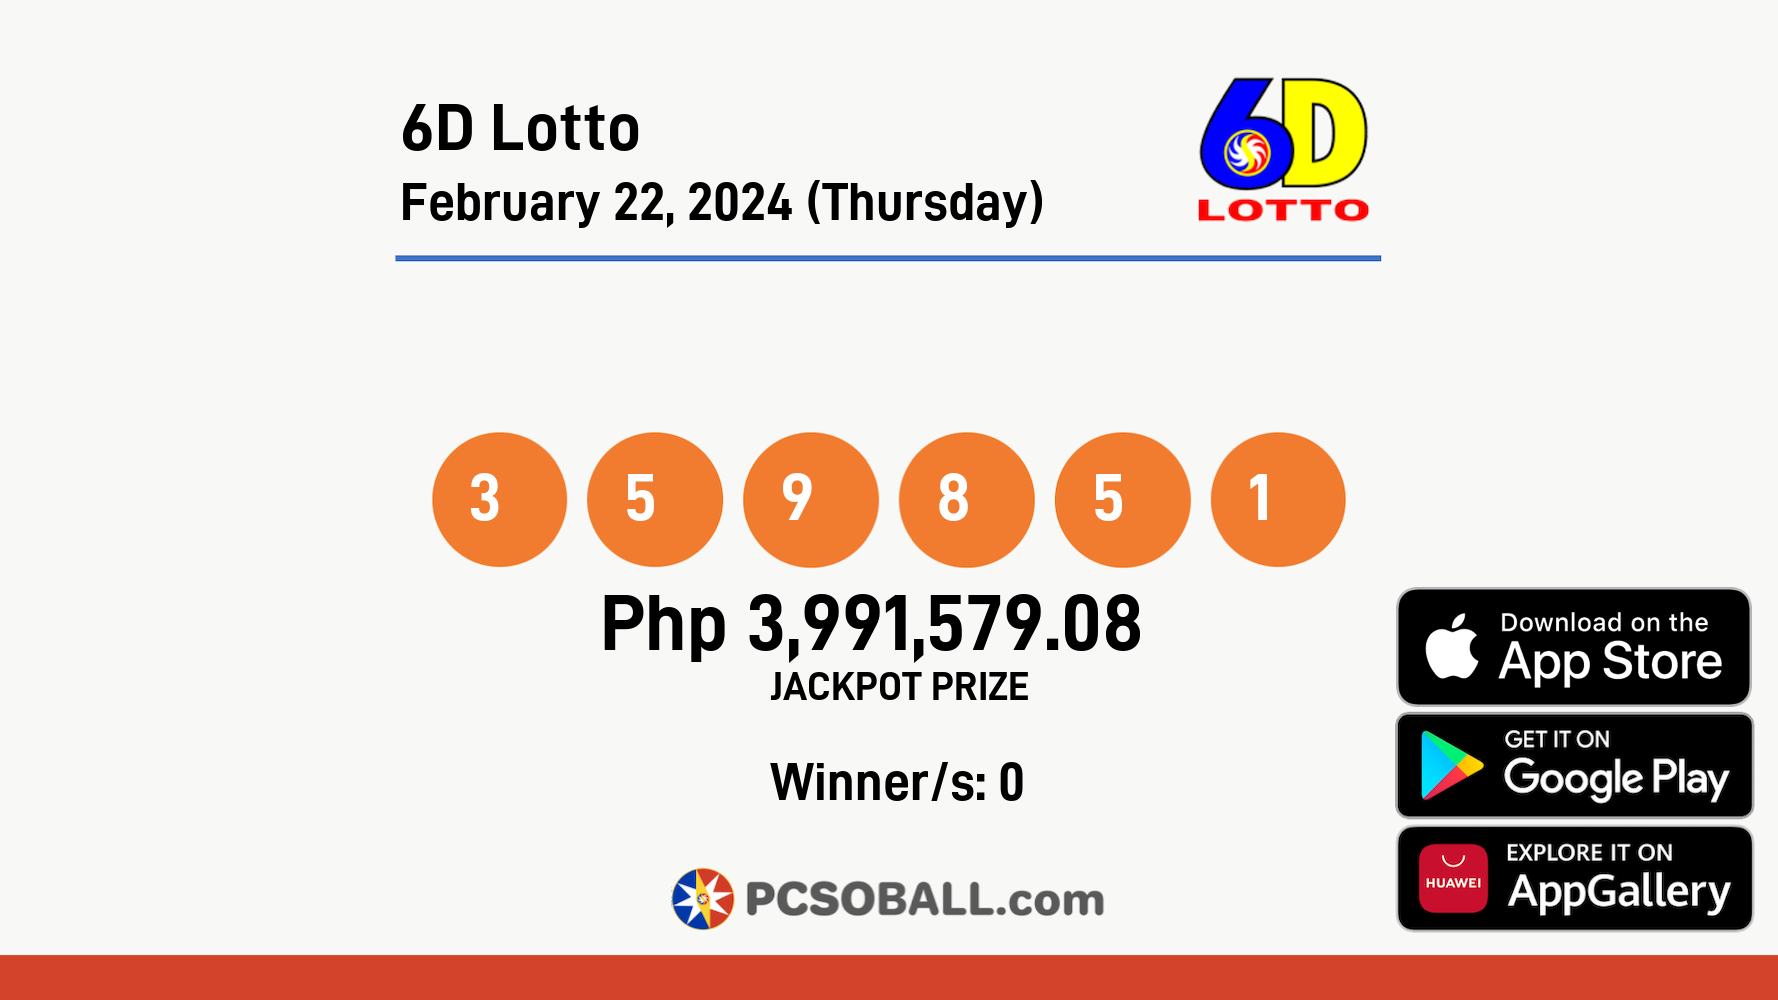 6D Lotto February 22, 2024 (Thursday) Result